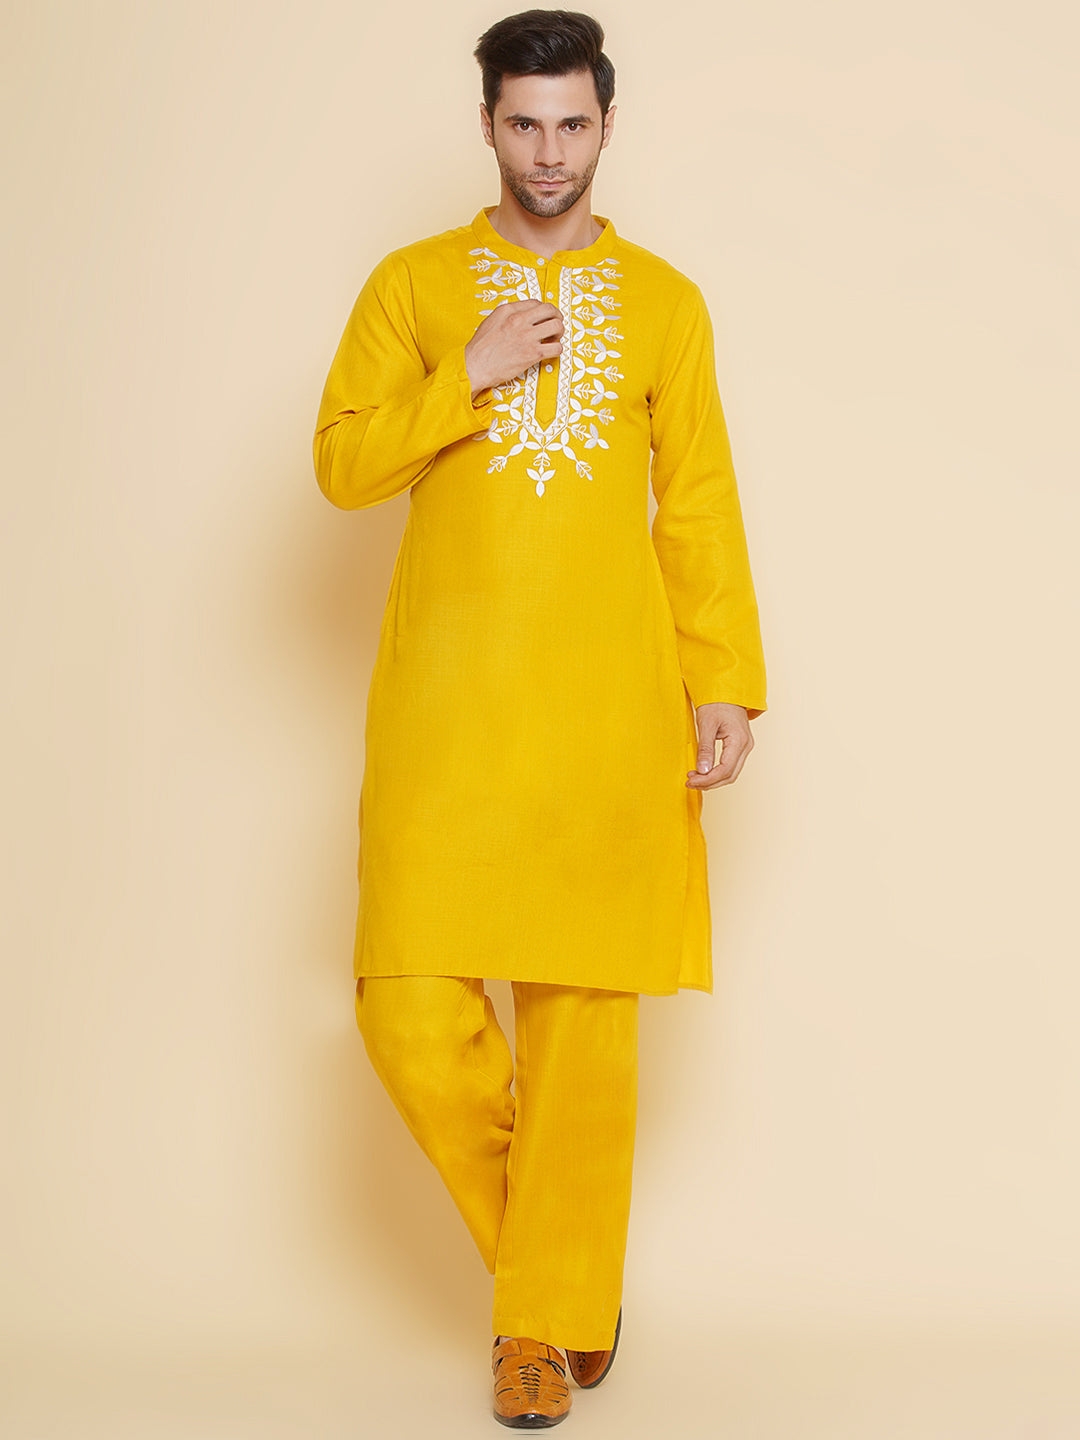 Baawara By Bhama Men Yellow Embroidered ethnic motifs Festive Kurta Pyjamas